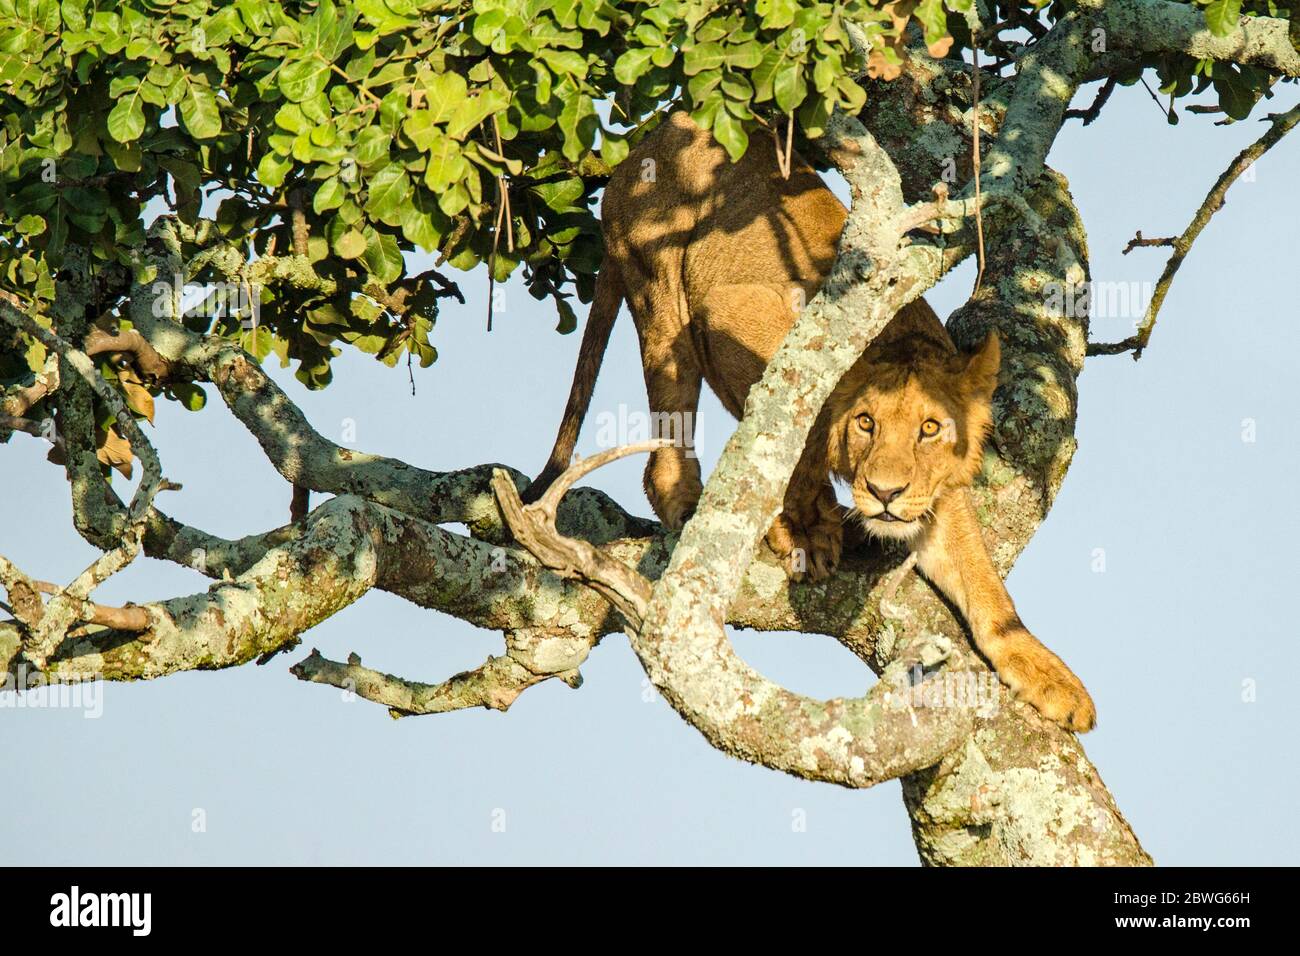 Löwin (Panthera leo) auf Baum, Serengeti Nationalpark, Tansania, Afrika Stockfoto